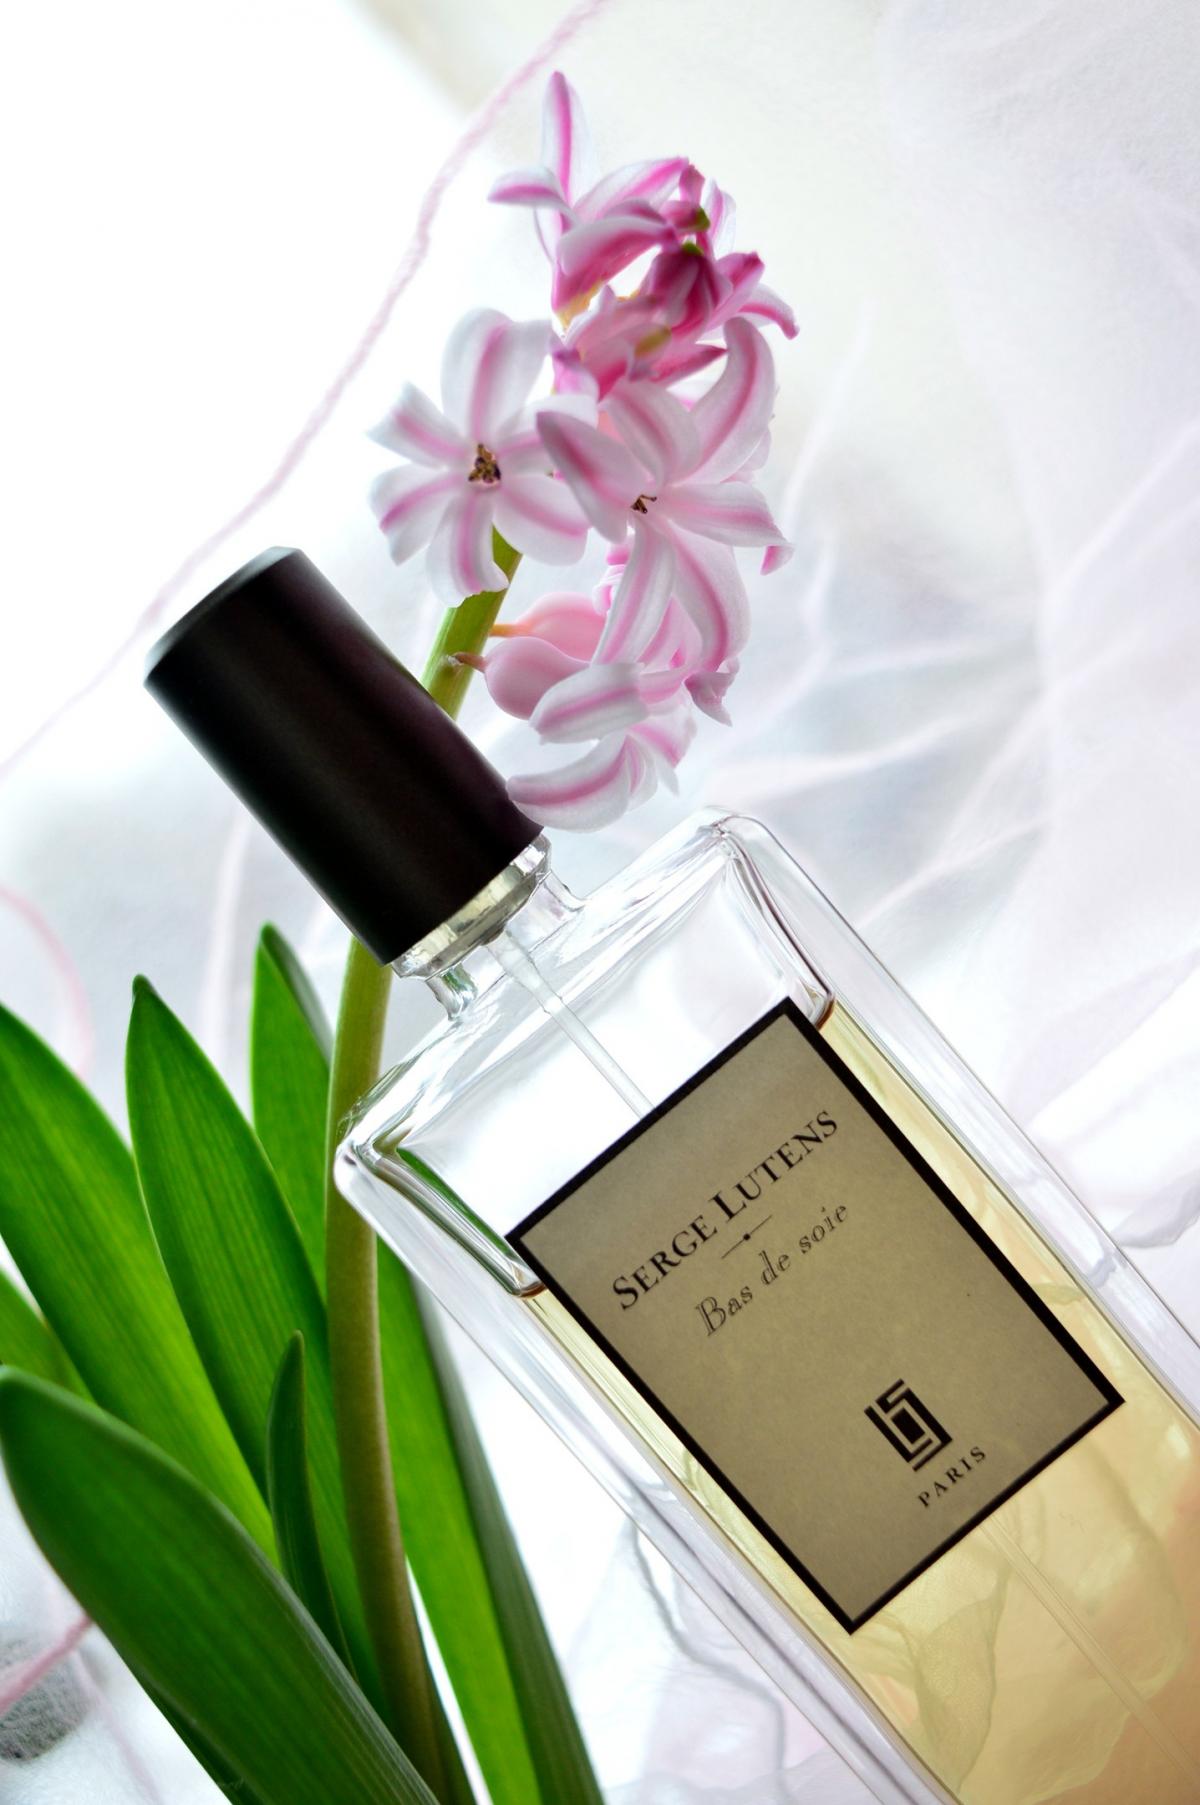 Bas de Soie Serge Lutens perfume - a fragrance for women and men 2010